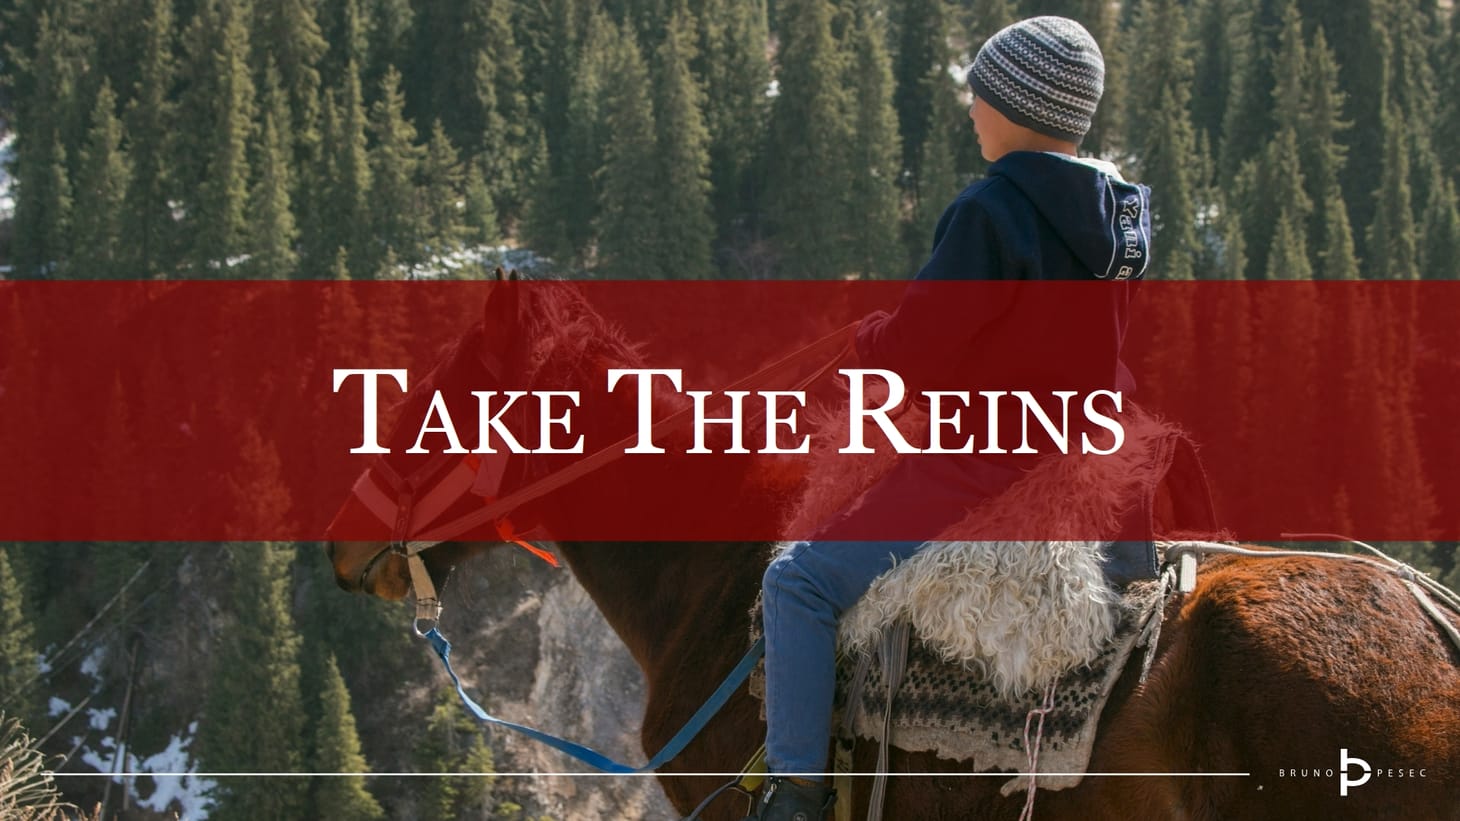 Take the reins